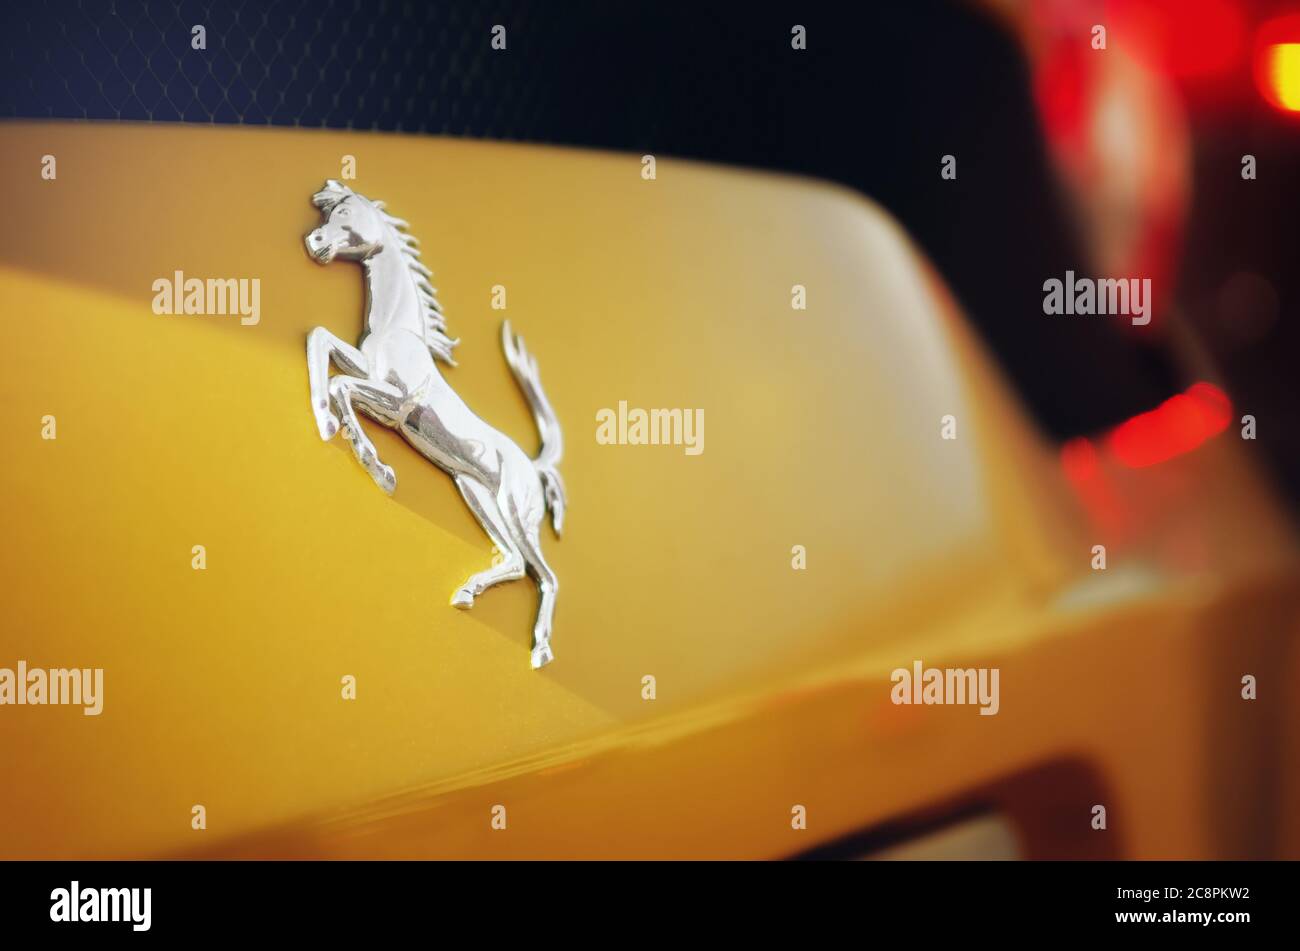 ALBA, ITALIA - 15 DE NOVIEMBRE de 2018: El logo de Ferrari en un coche deportivo Ferrary amarillo estacionado en Alba (Italia) el 15 de noviembre de 2018 Foto de stock